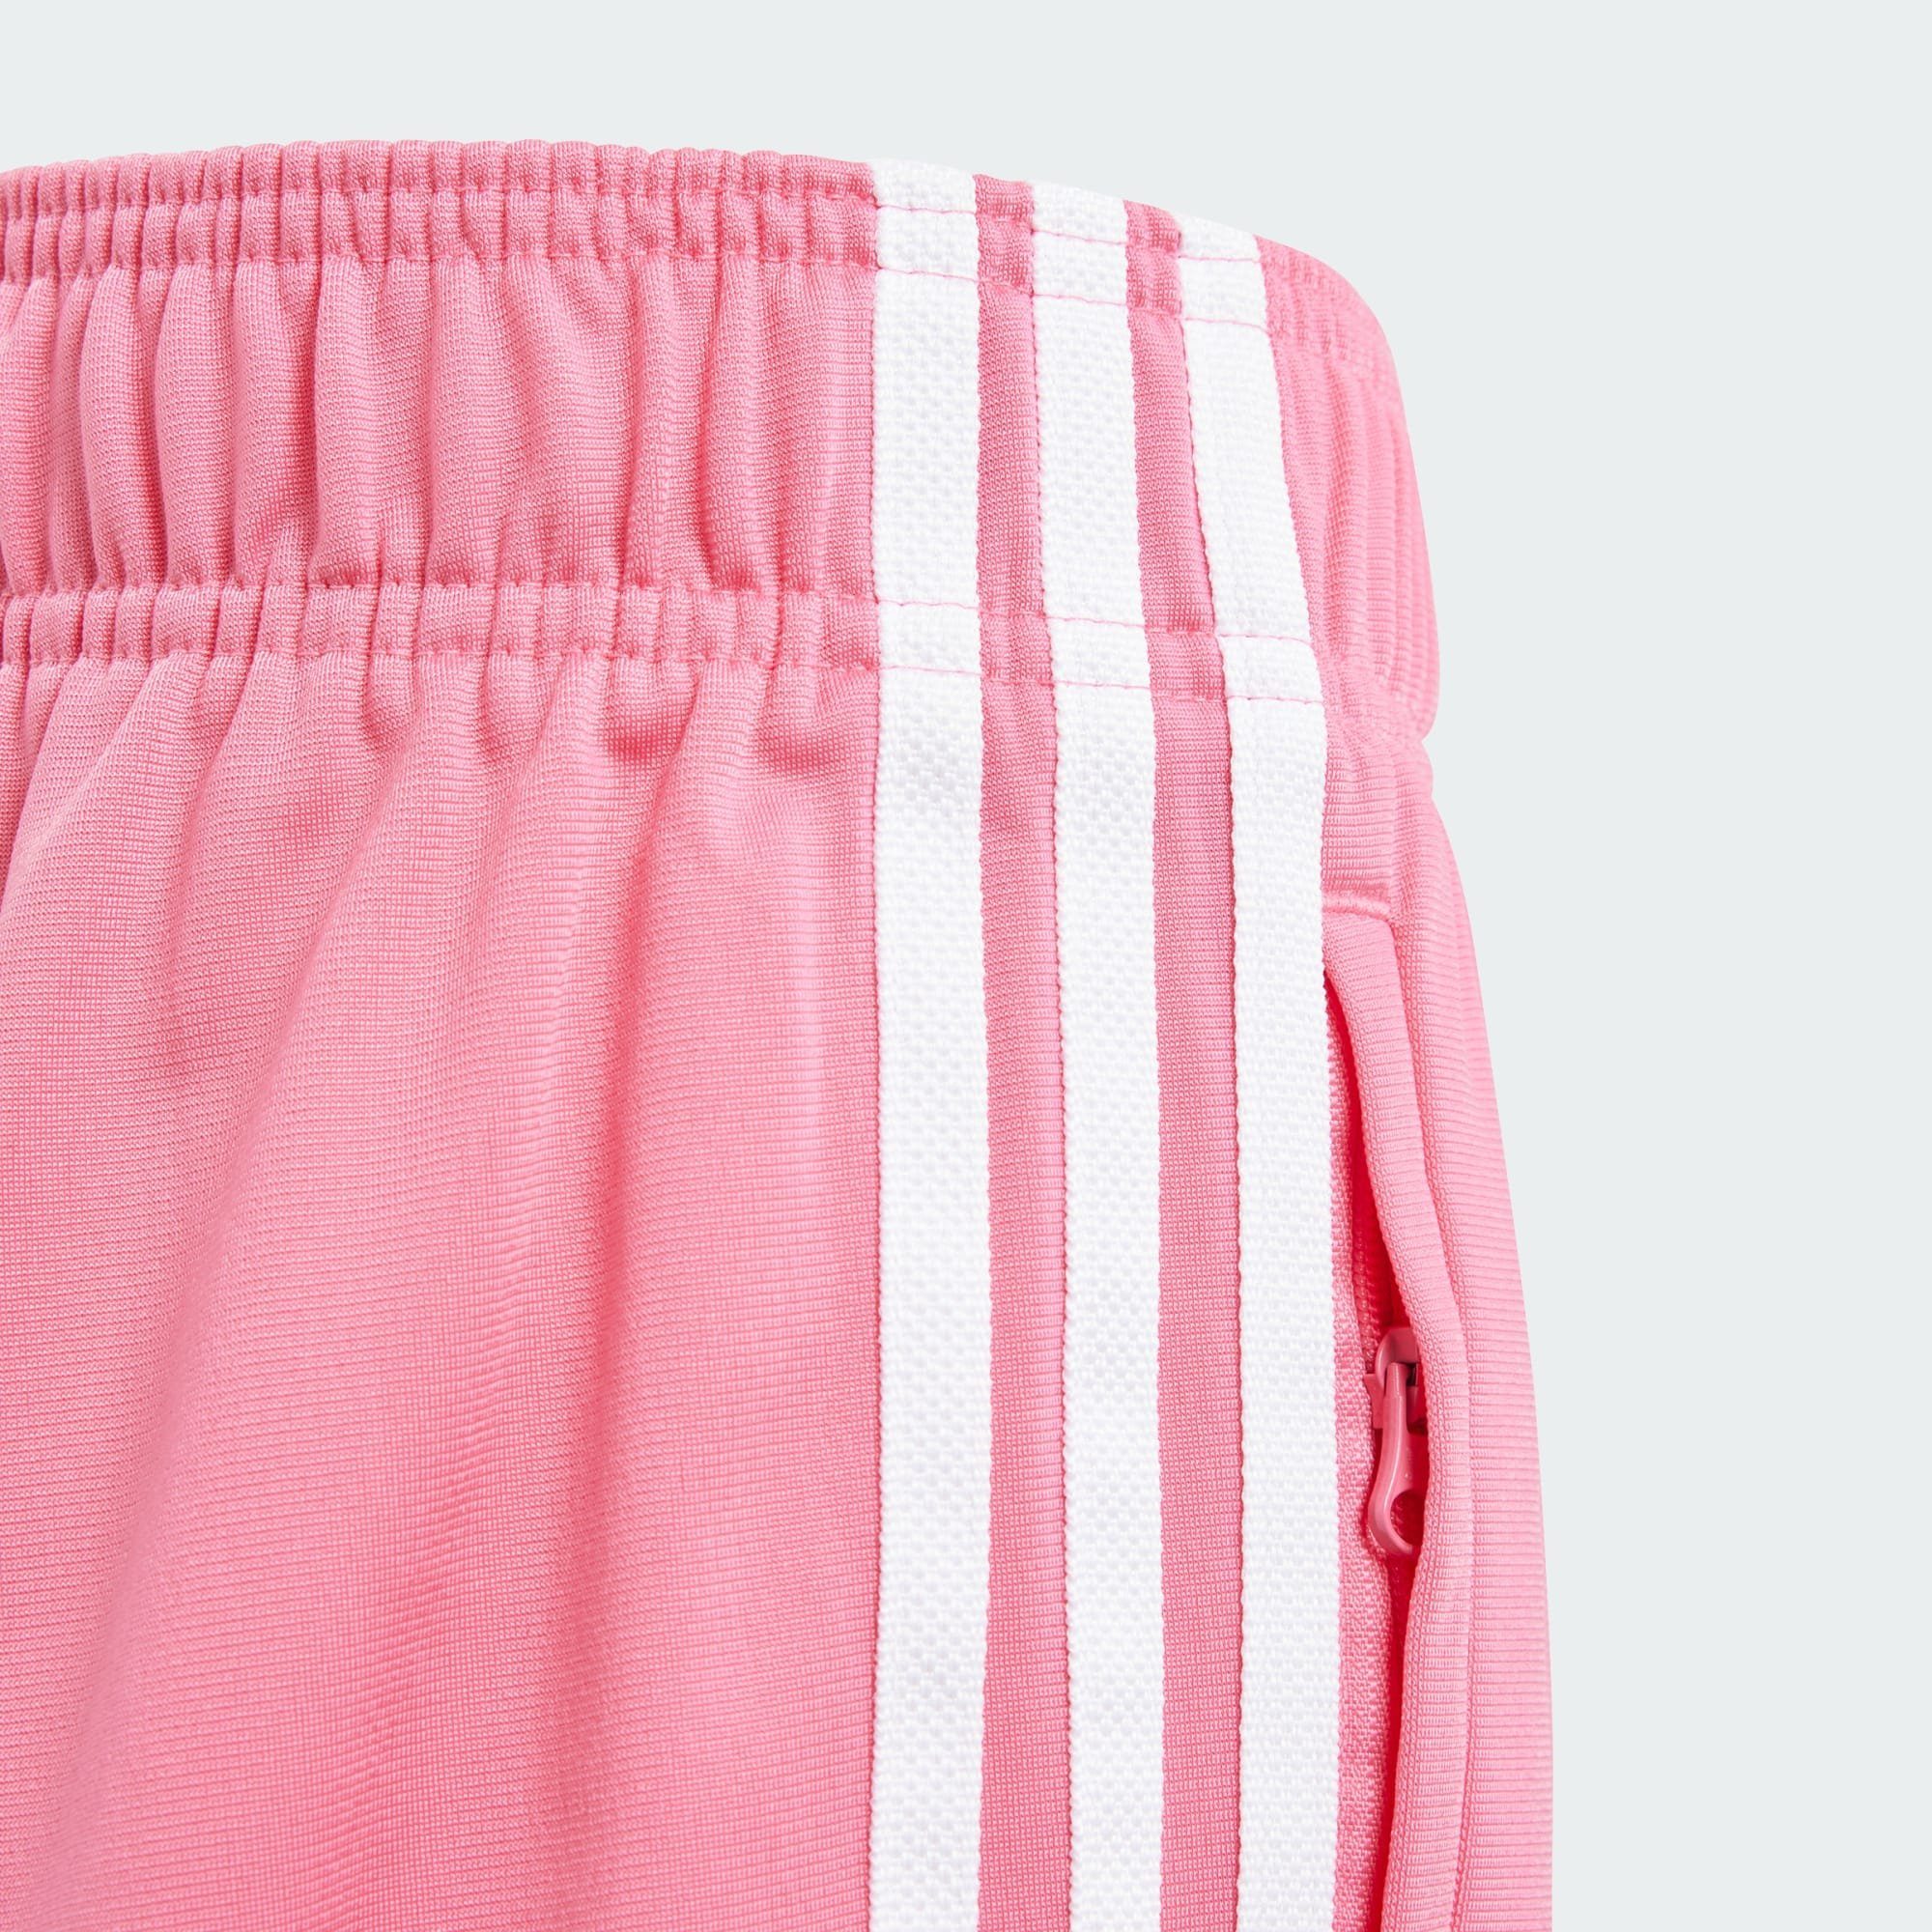 adidas Originals Leichtathletik-Hose ADICOLOR SST Pink Fusion TRAININGSHOSE